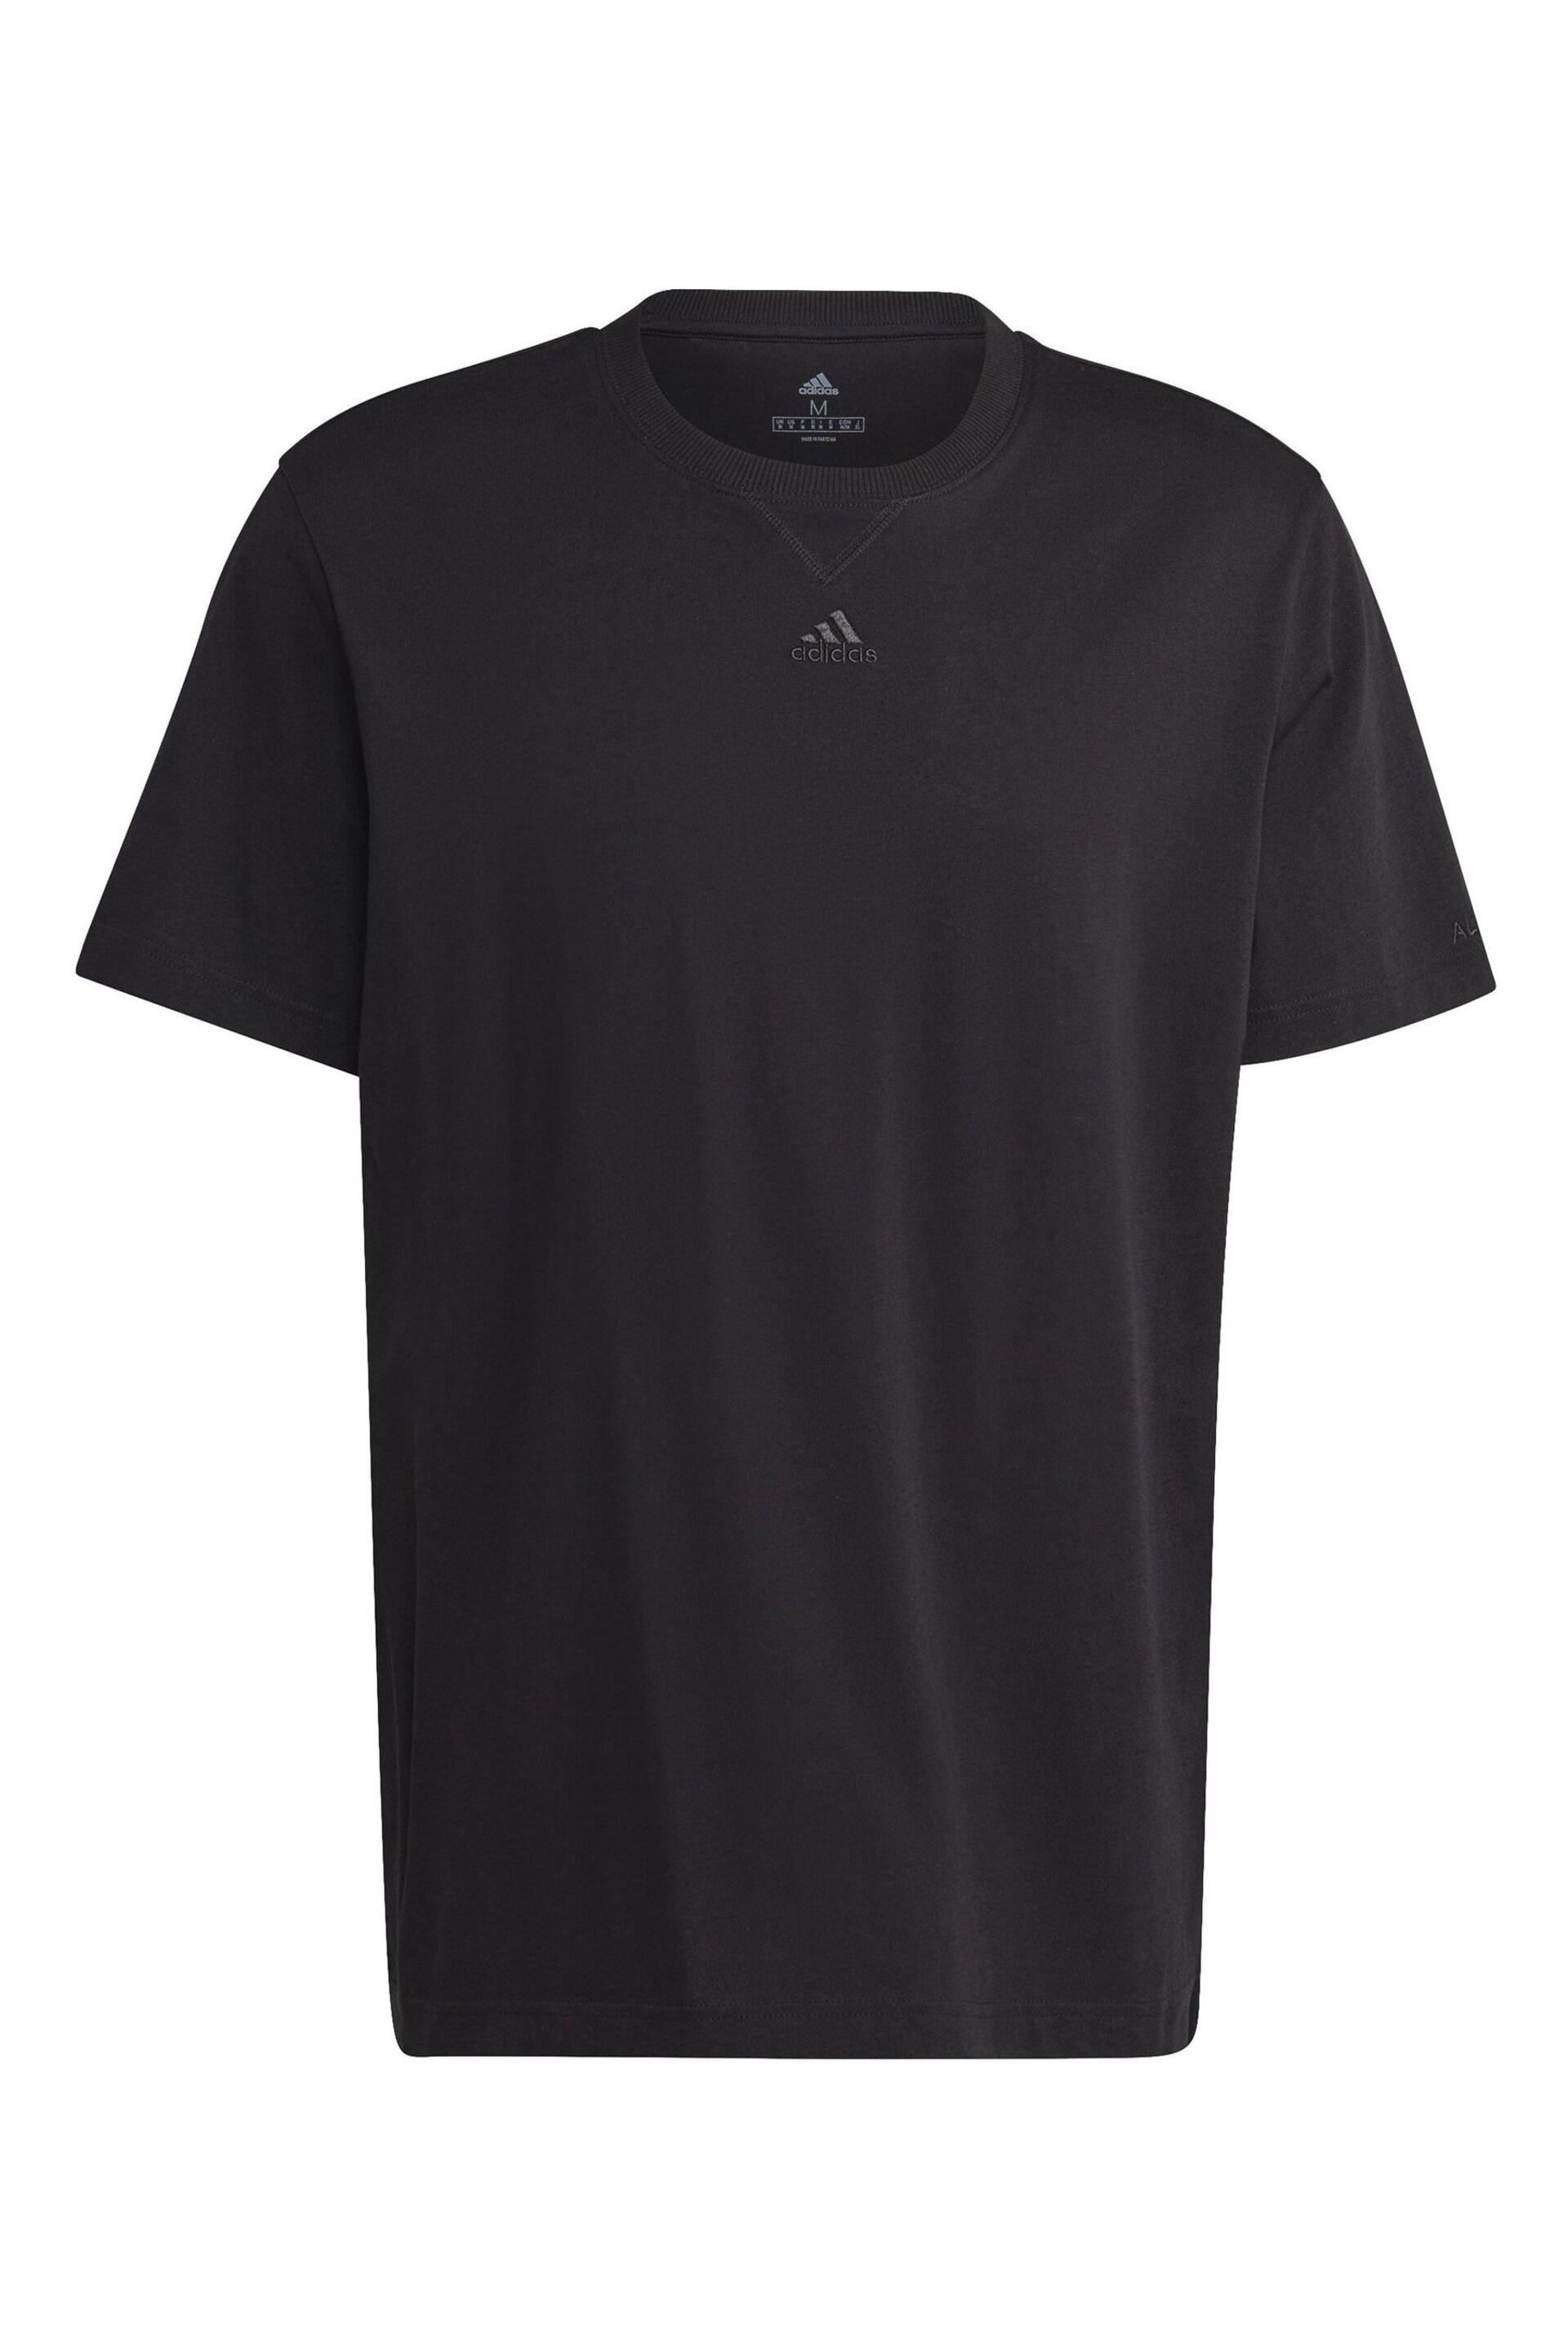 adidas Black Sportswear All SZN T-Shirt - Image 11 of 11